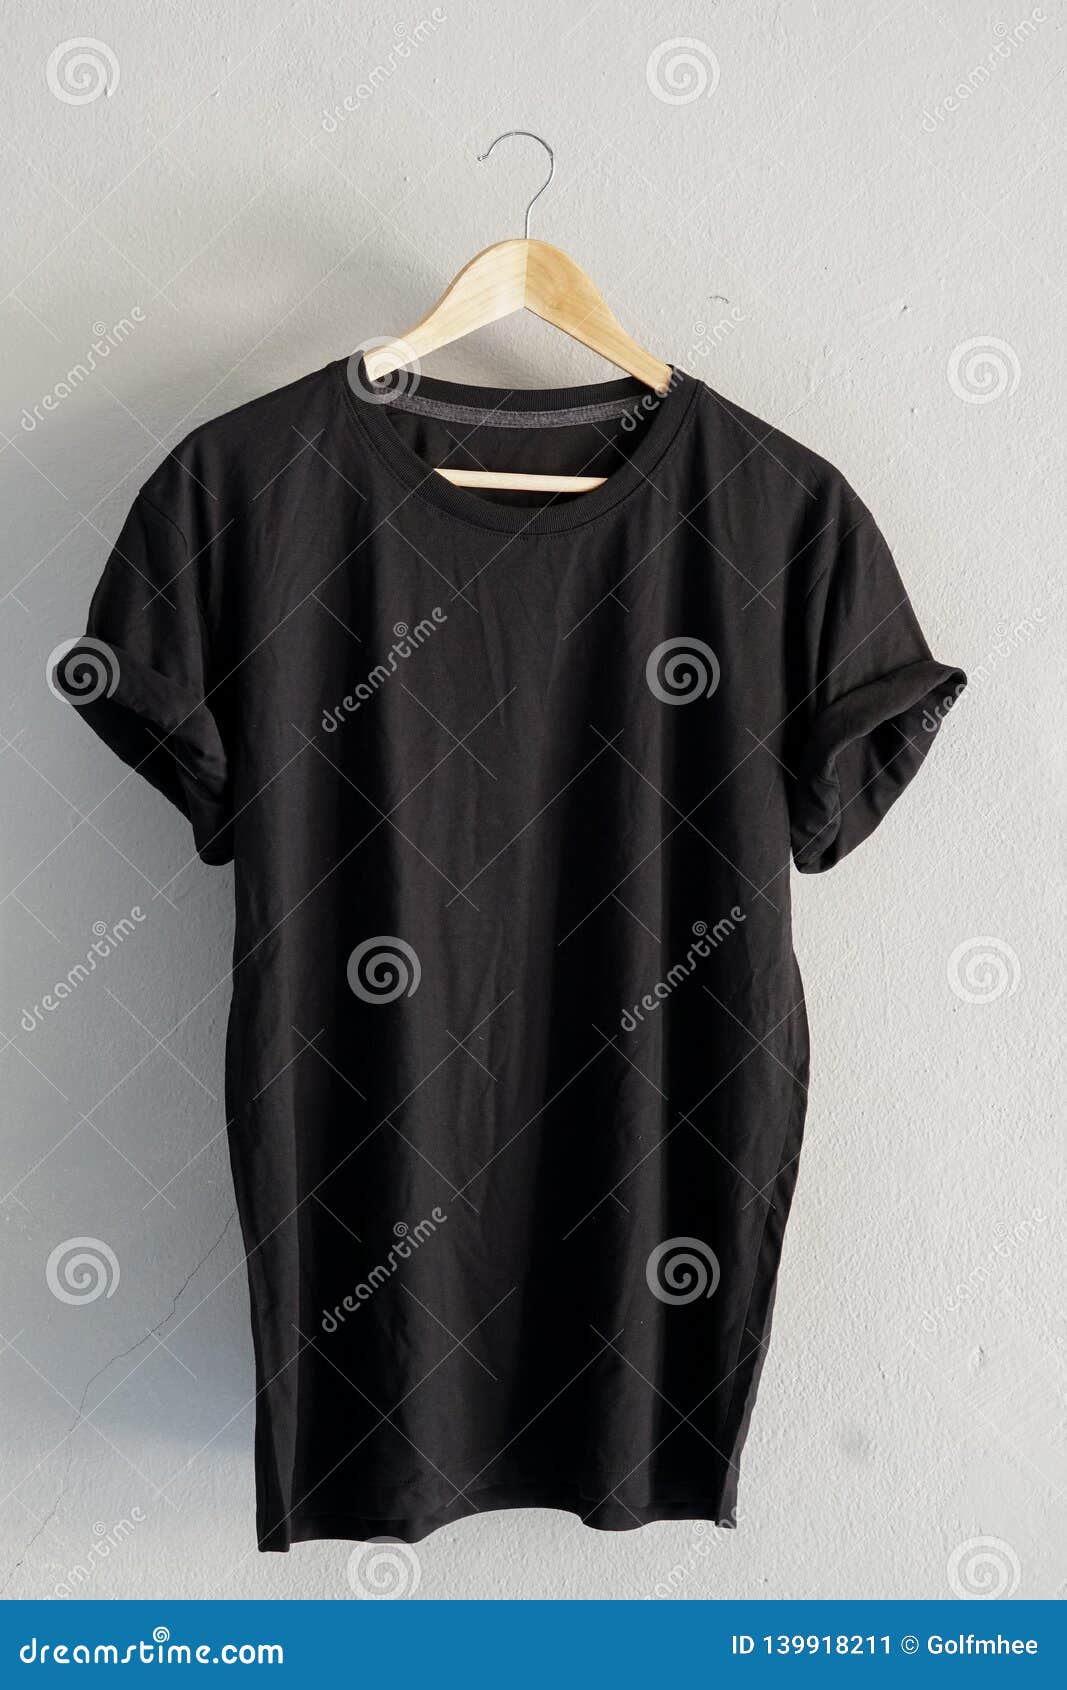 Download Retro Fold Black Cotton T-Shirt Clothes Mock Up Template ...